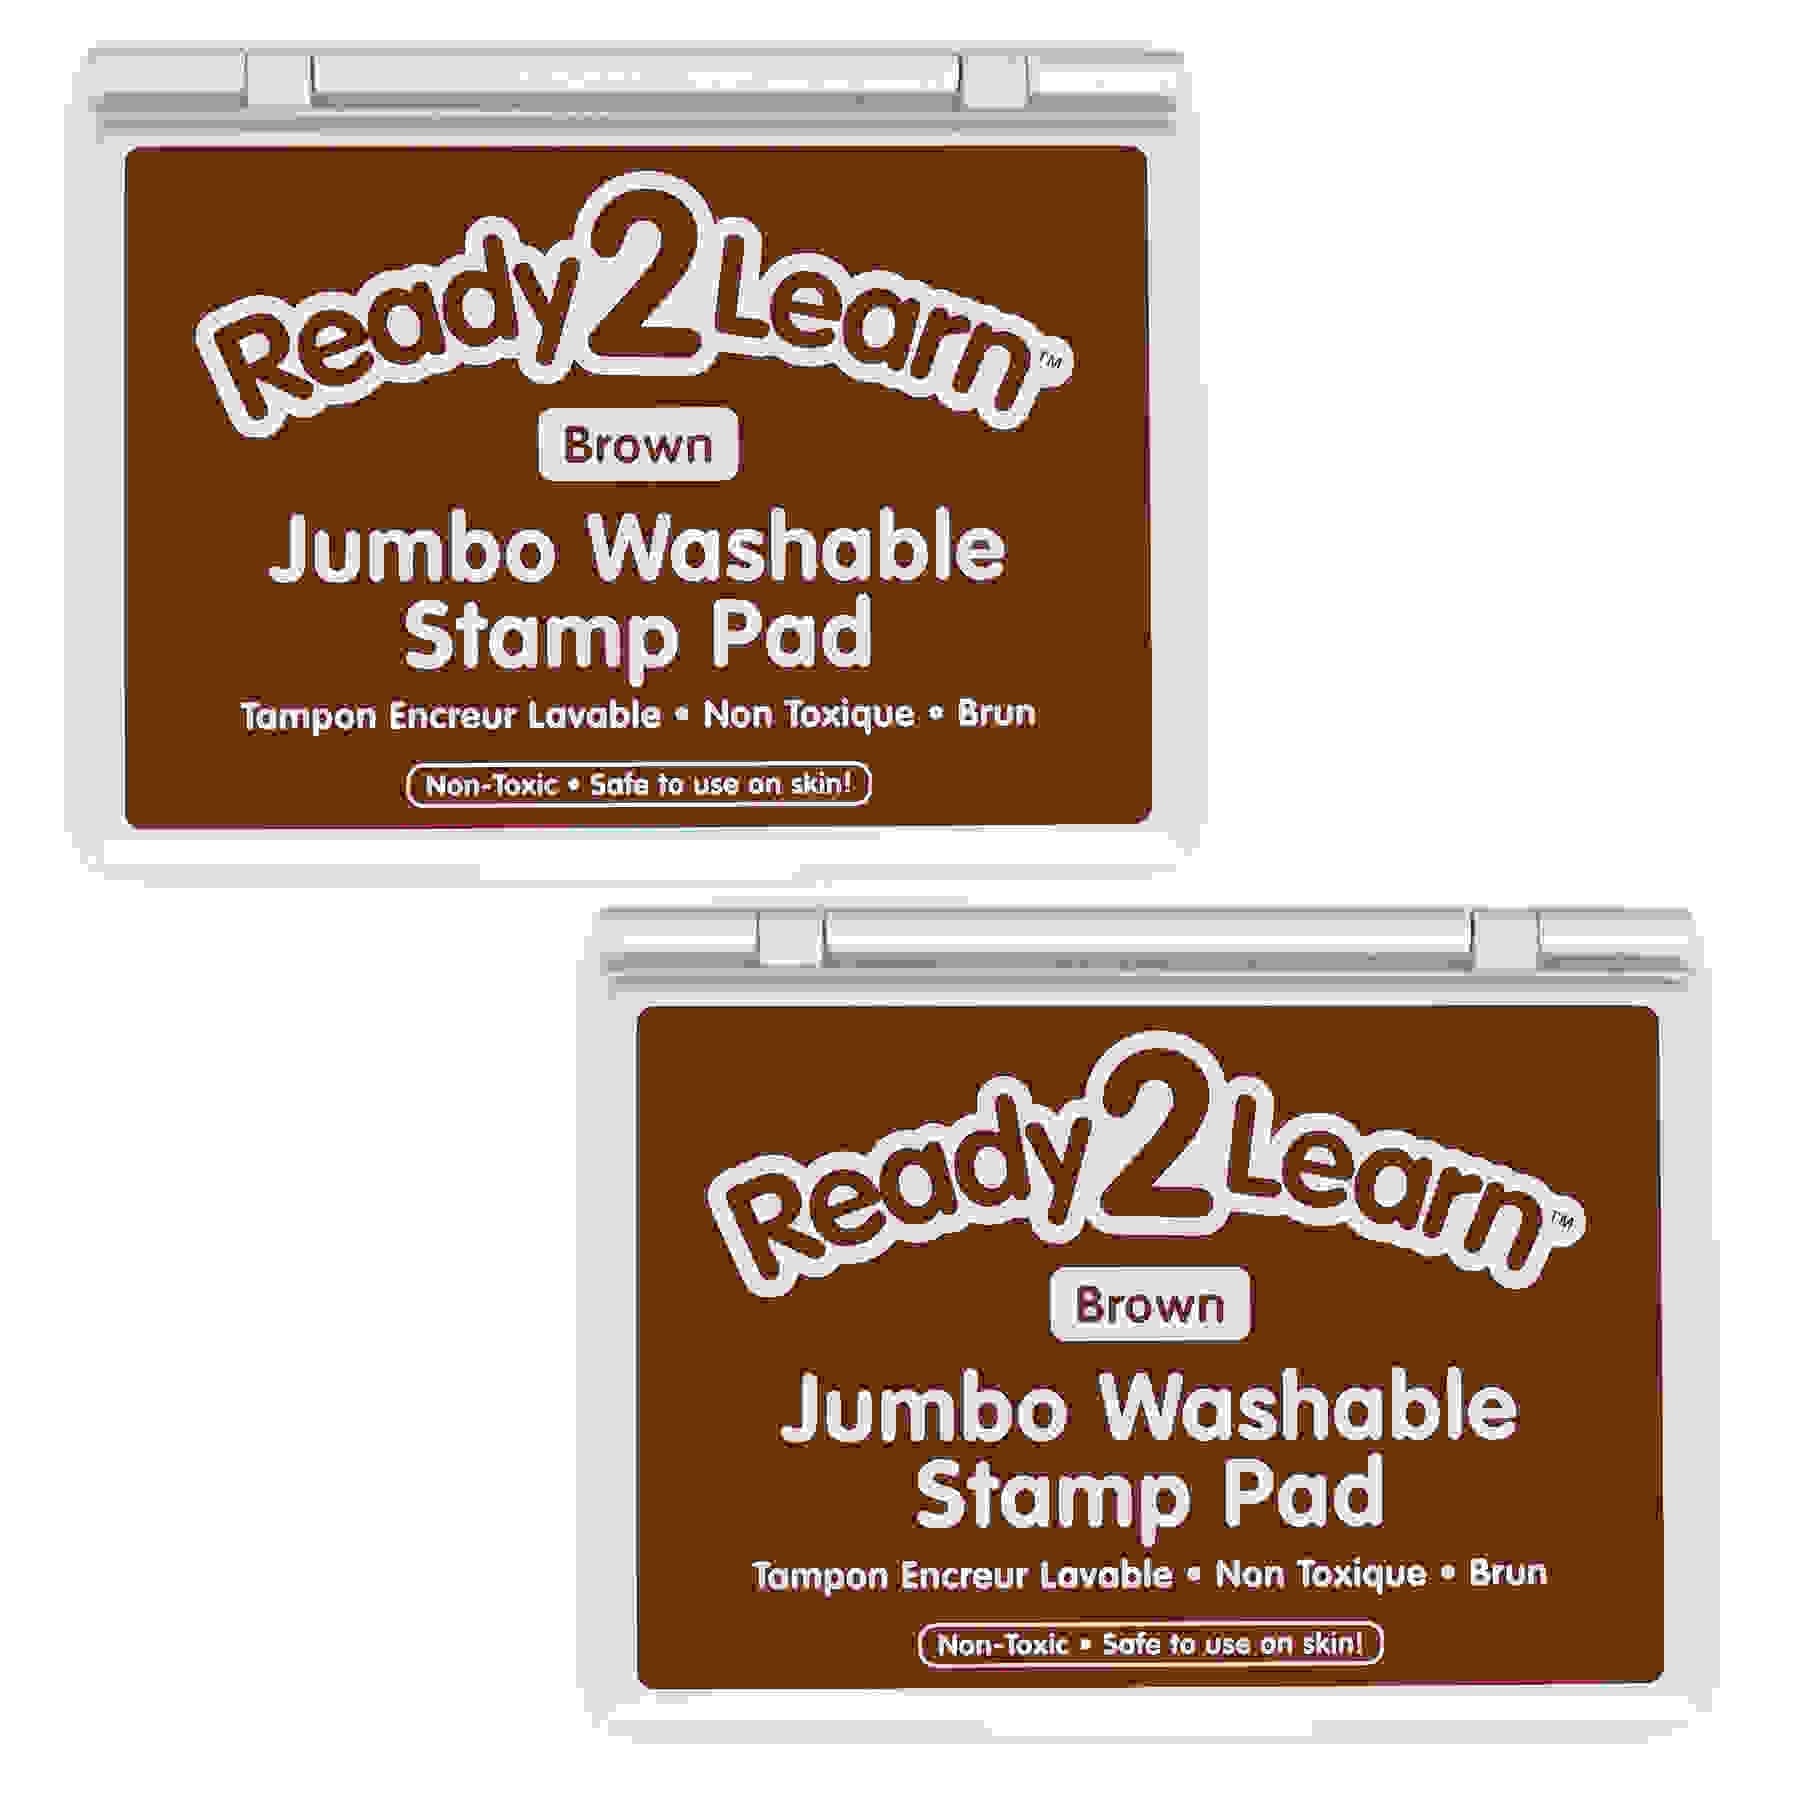 Jumbo Washable Stamp Pad - Brown - Pack of 2